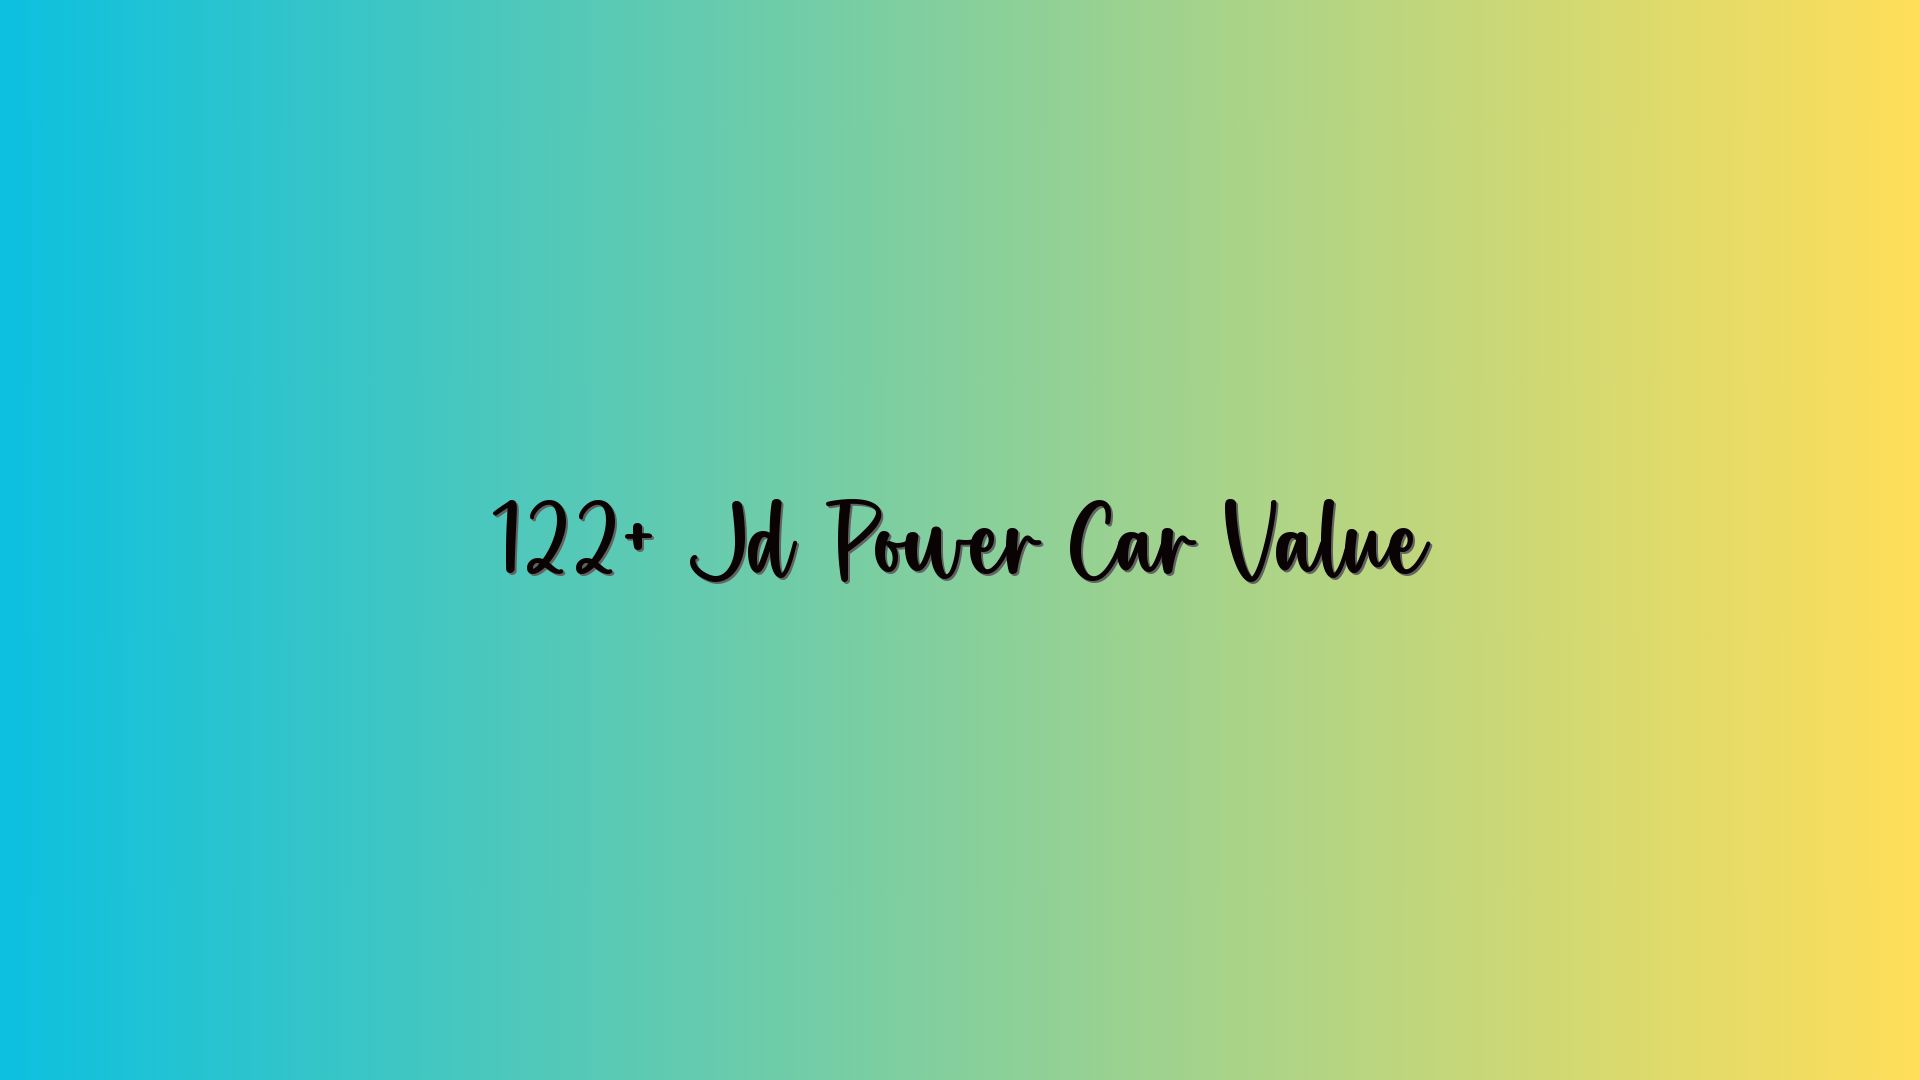 122+ Jd Power Car Value